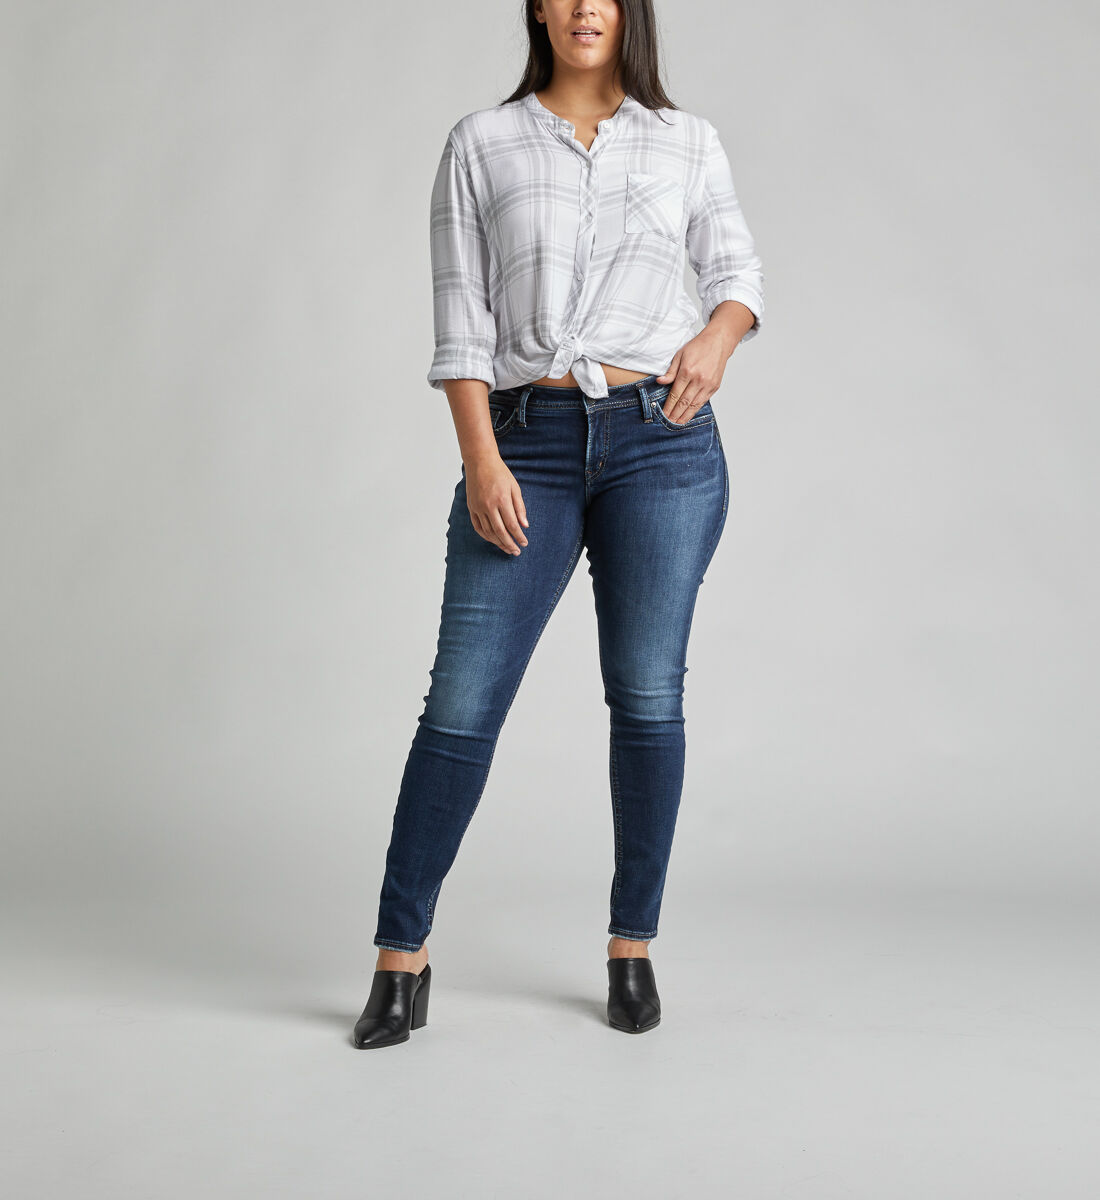 Silver Suki Mid Rise Women's Dark Wash Jeans Plus Size 18/32 W9516SJB376